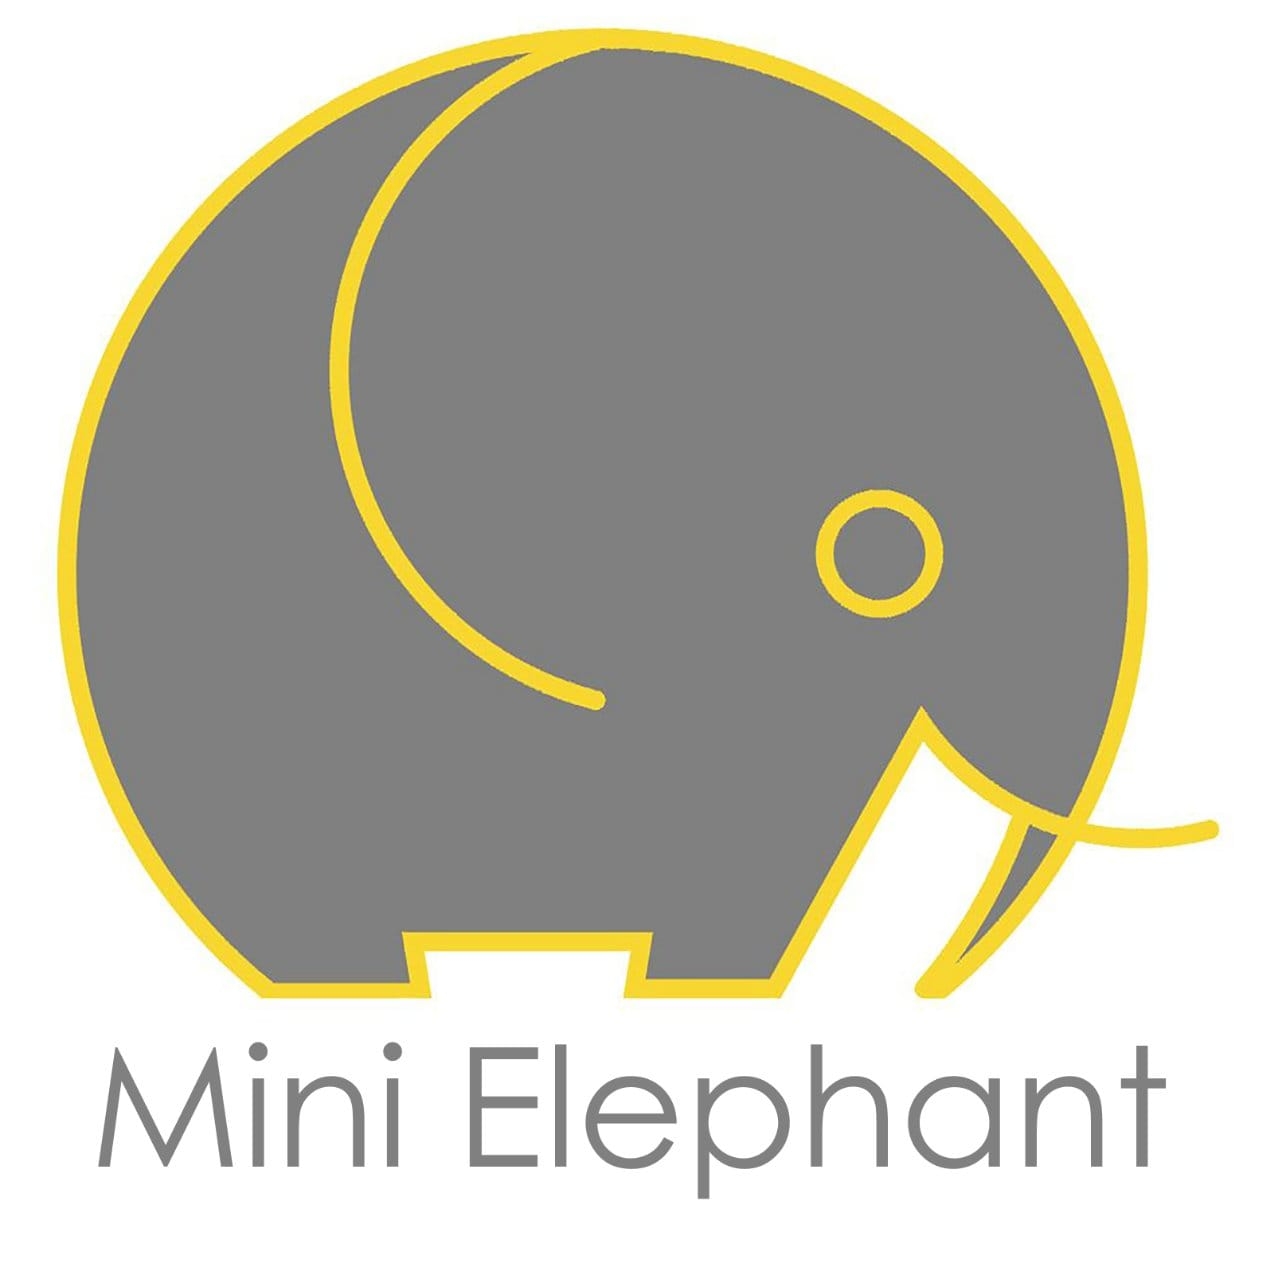 Mini Elephant logo